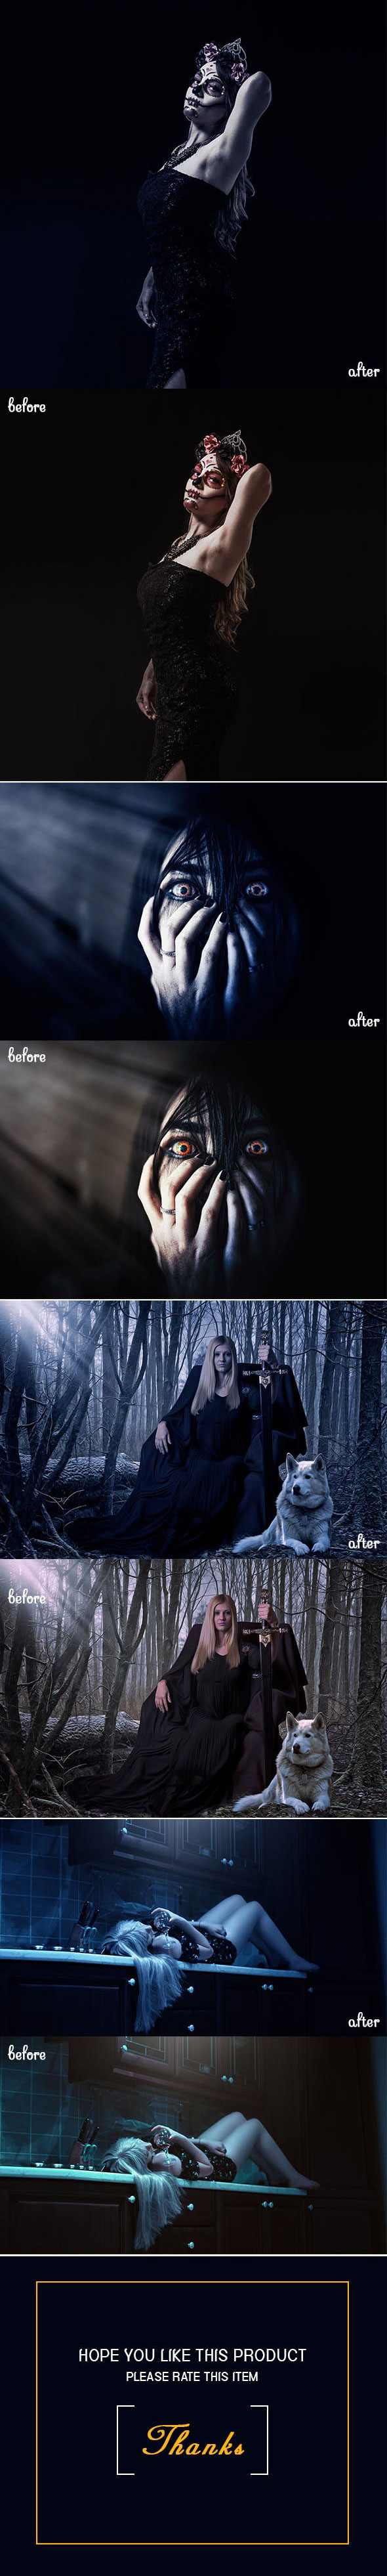 时尚高端图片黑暗哥特式风格的PS动作 Dark Gothic Photoshop Action [atn]插图(1)